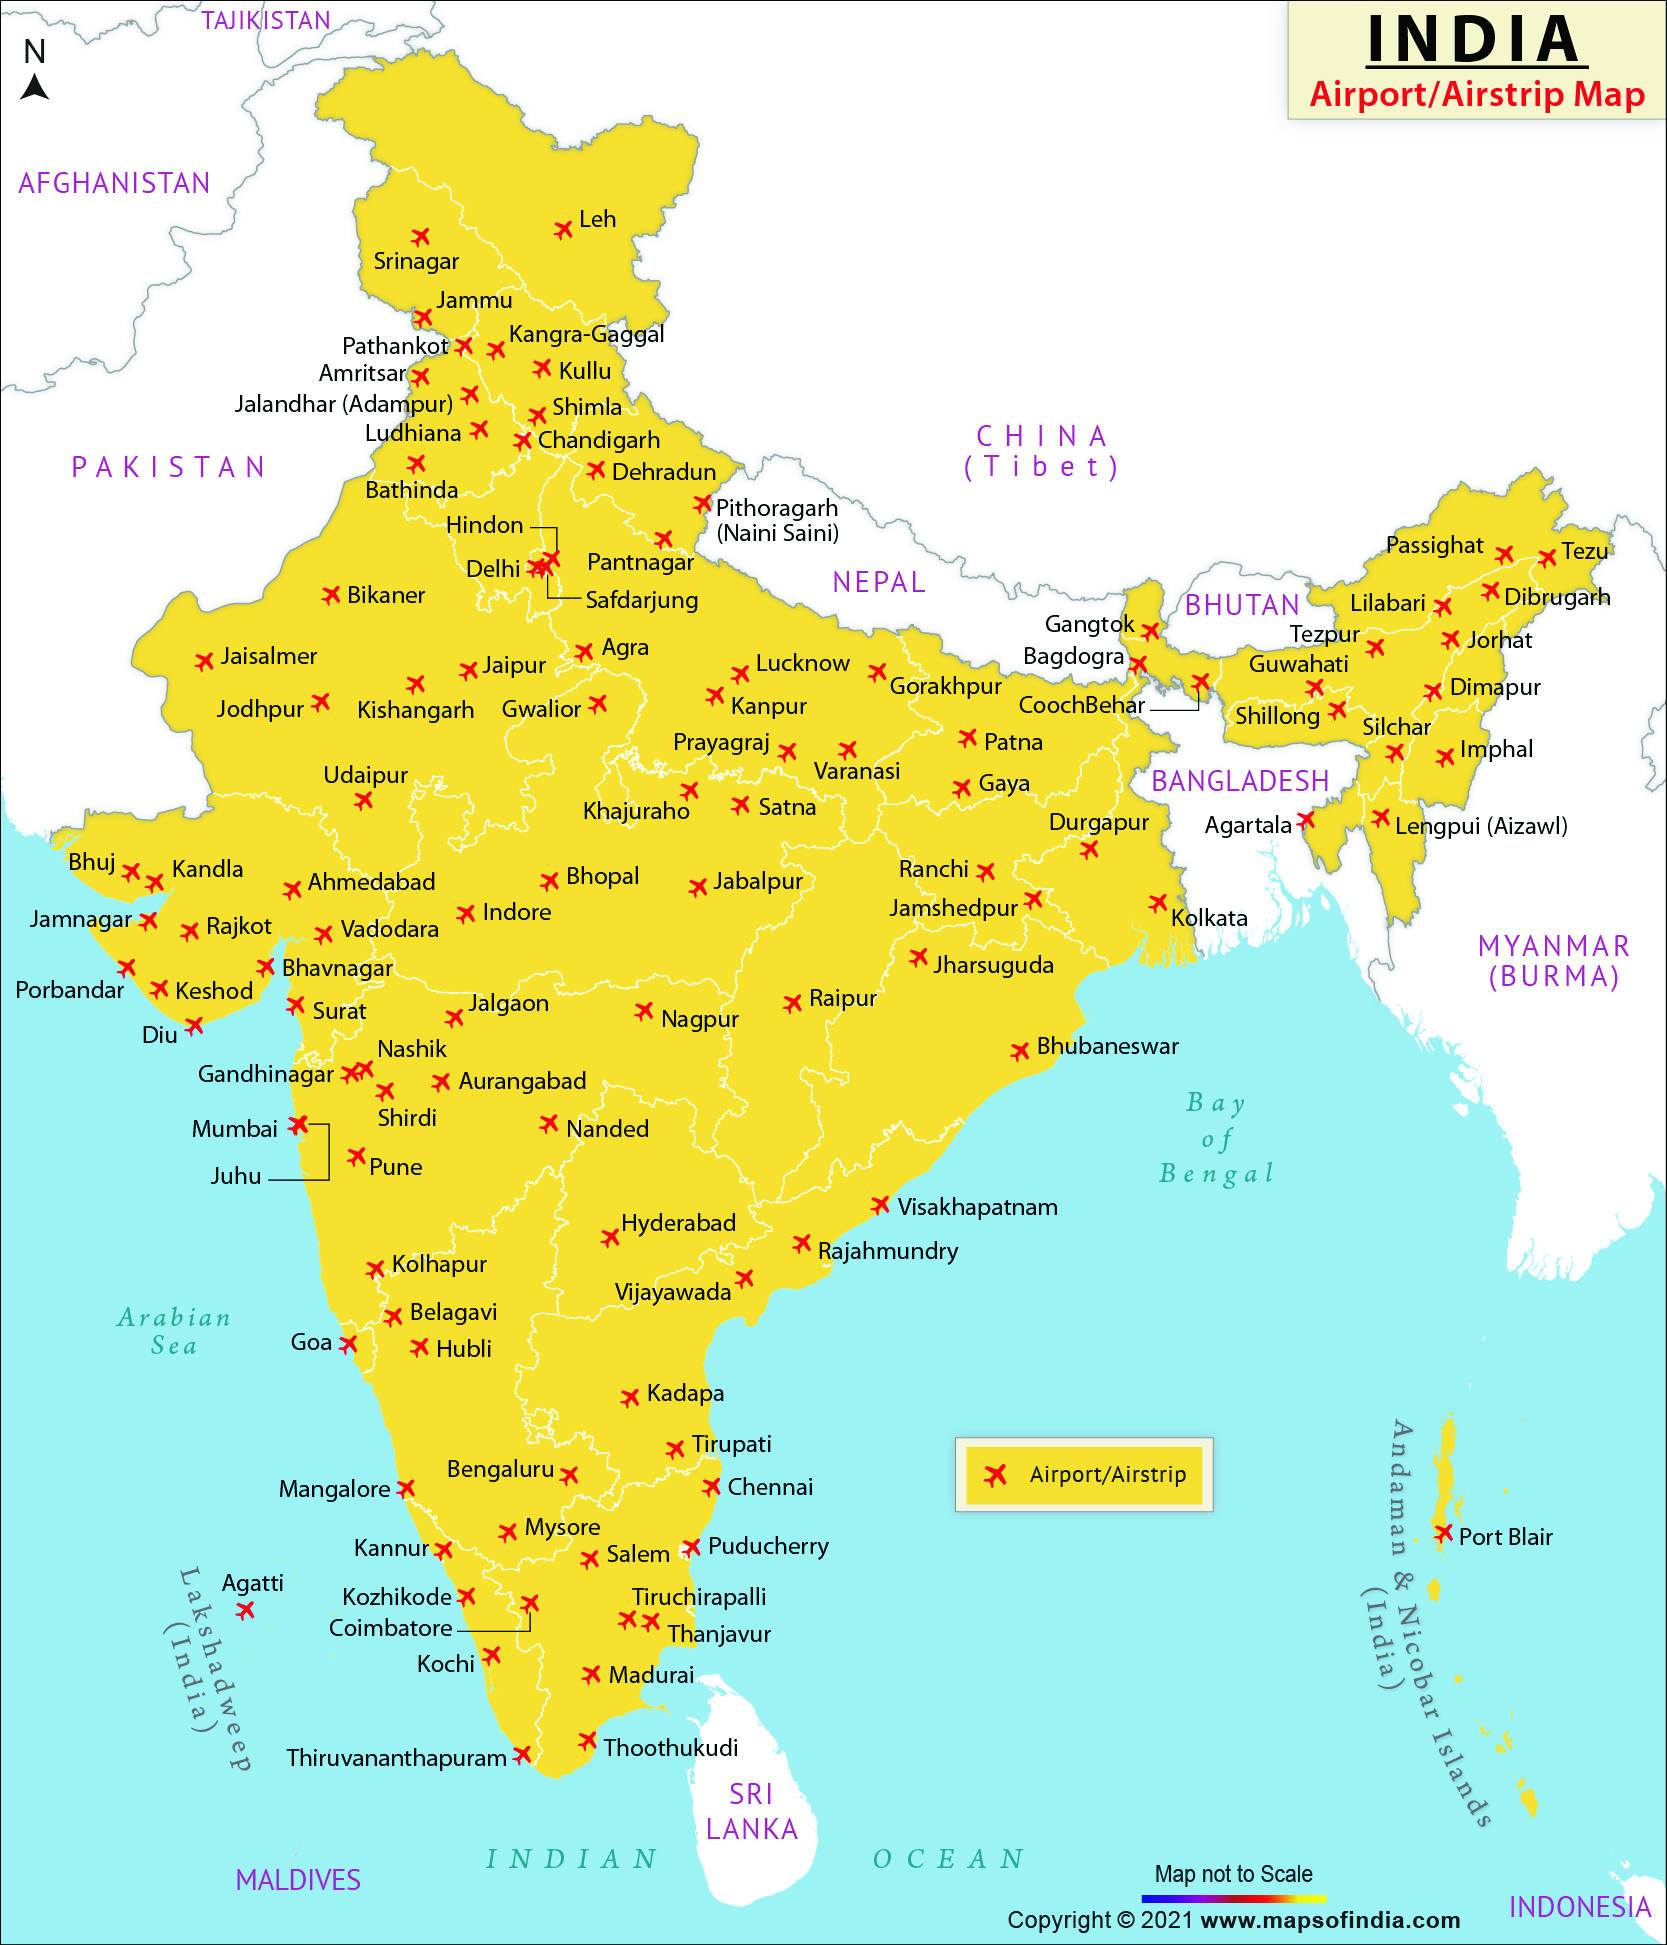 https://www.mapsofindia.com/maps/india/india-airport-map.jpg